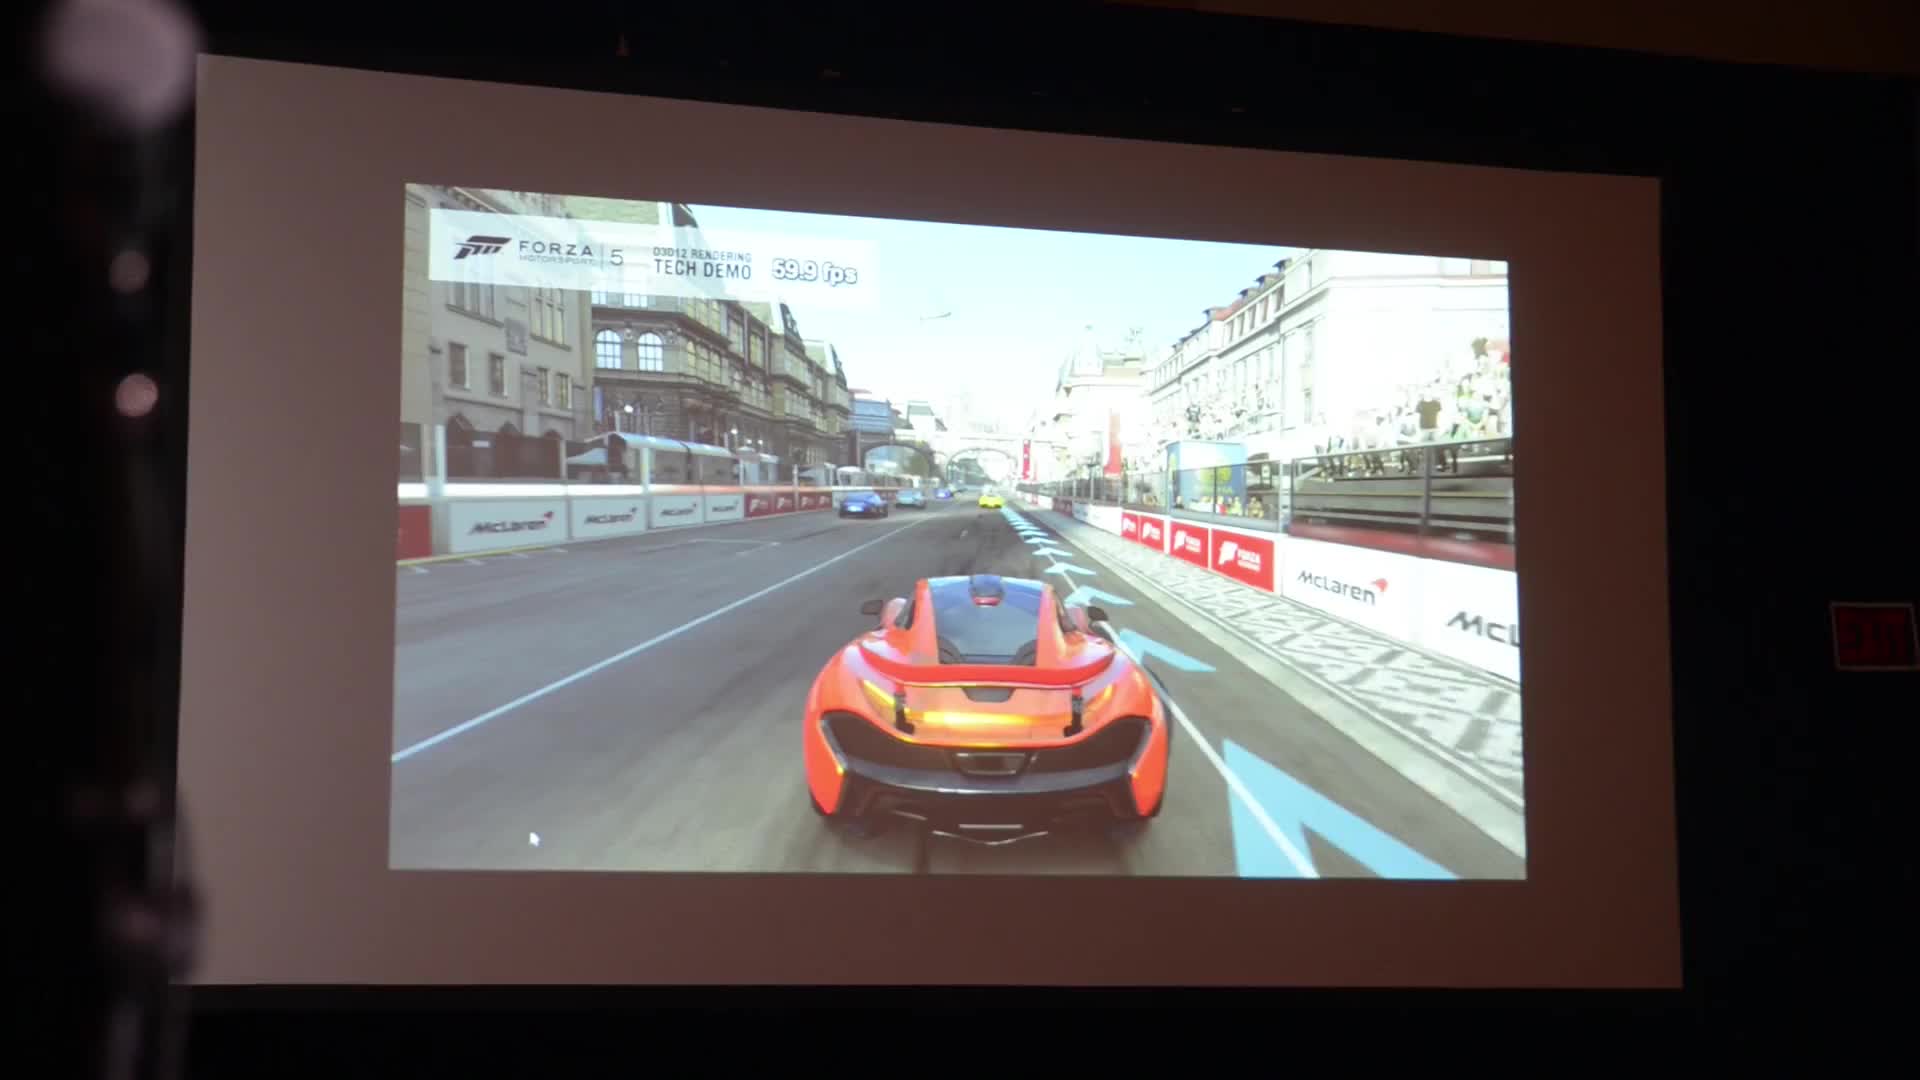 Forza Motorsport 5 - DX12 Nvidia tech demo